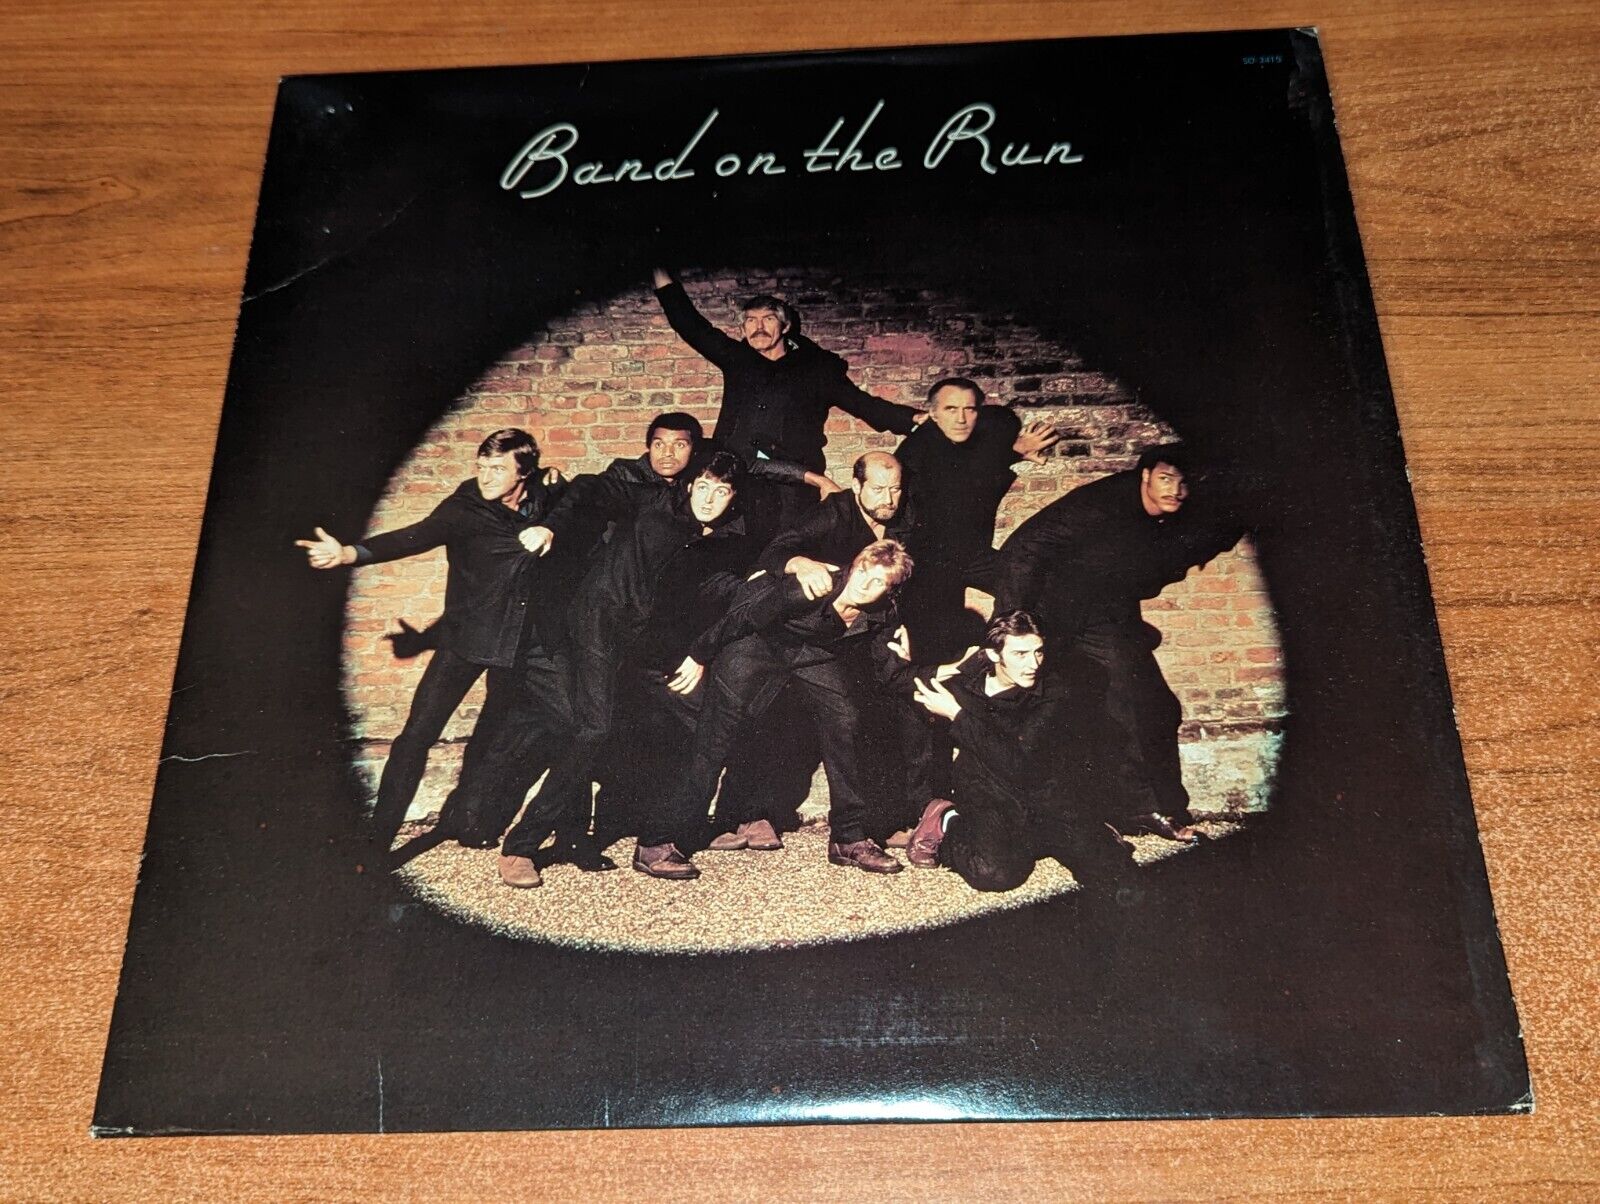 Paul McCartney "Band on the Run" Record LP Vinyl 12" 1973 EMI/Apple SO-3415